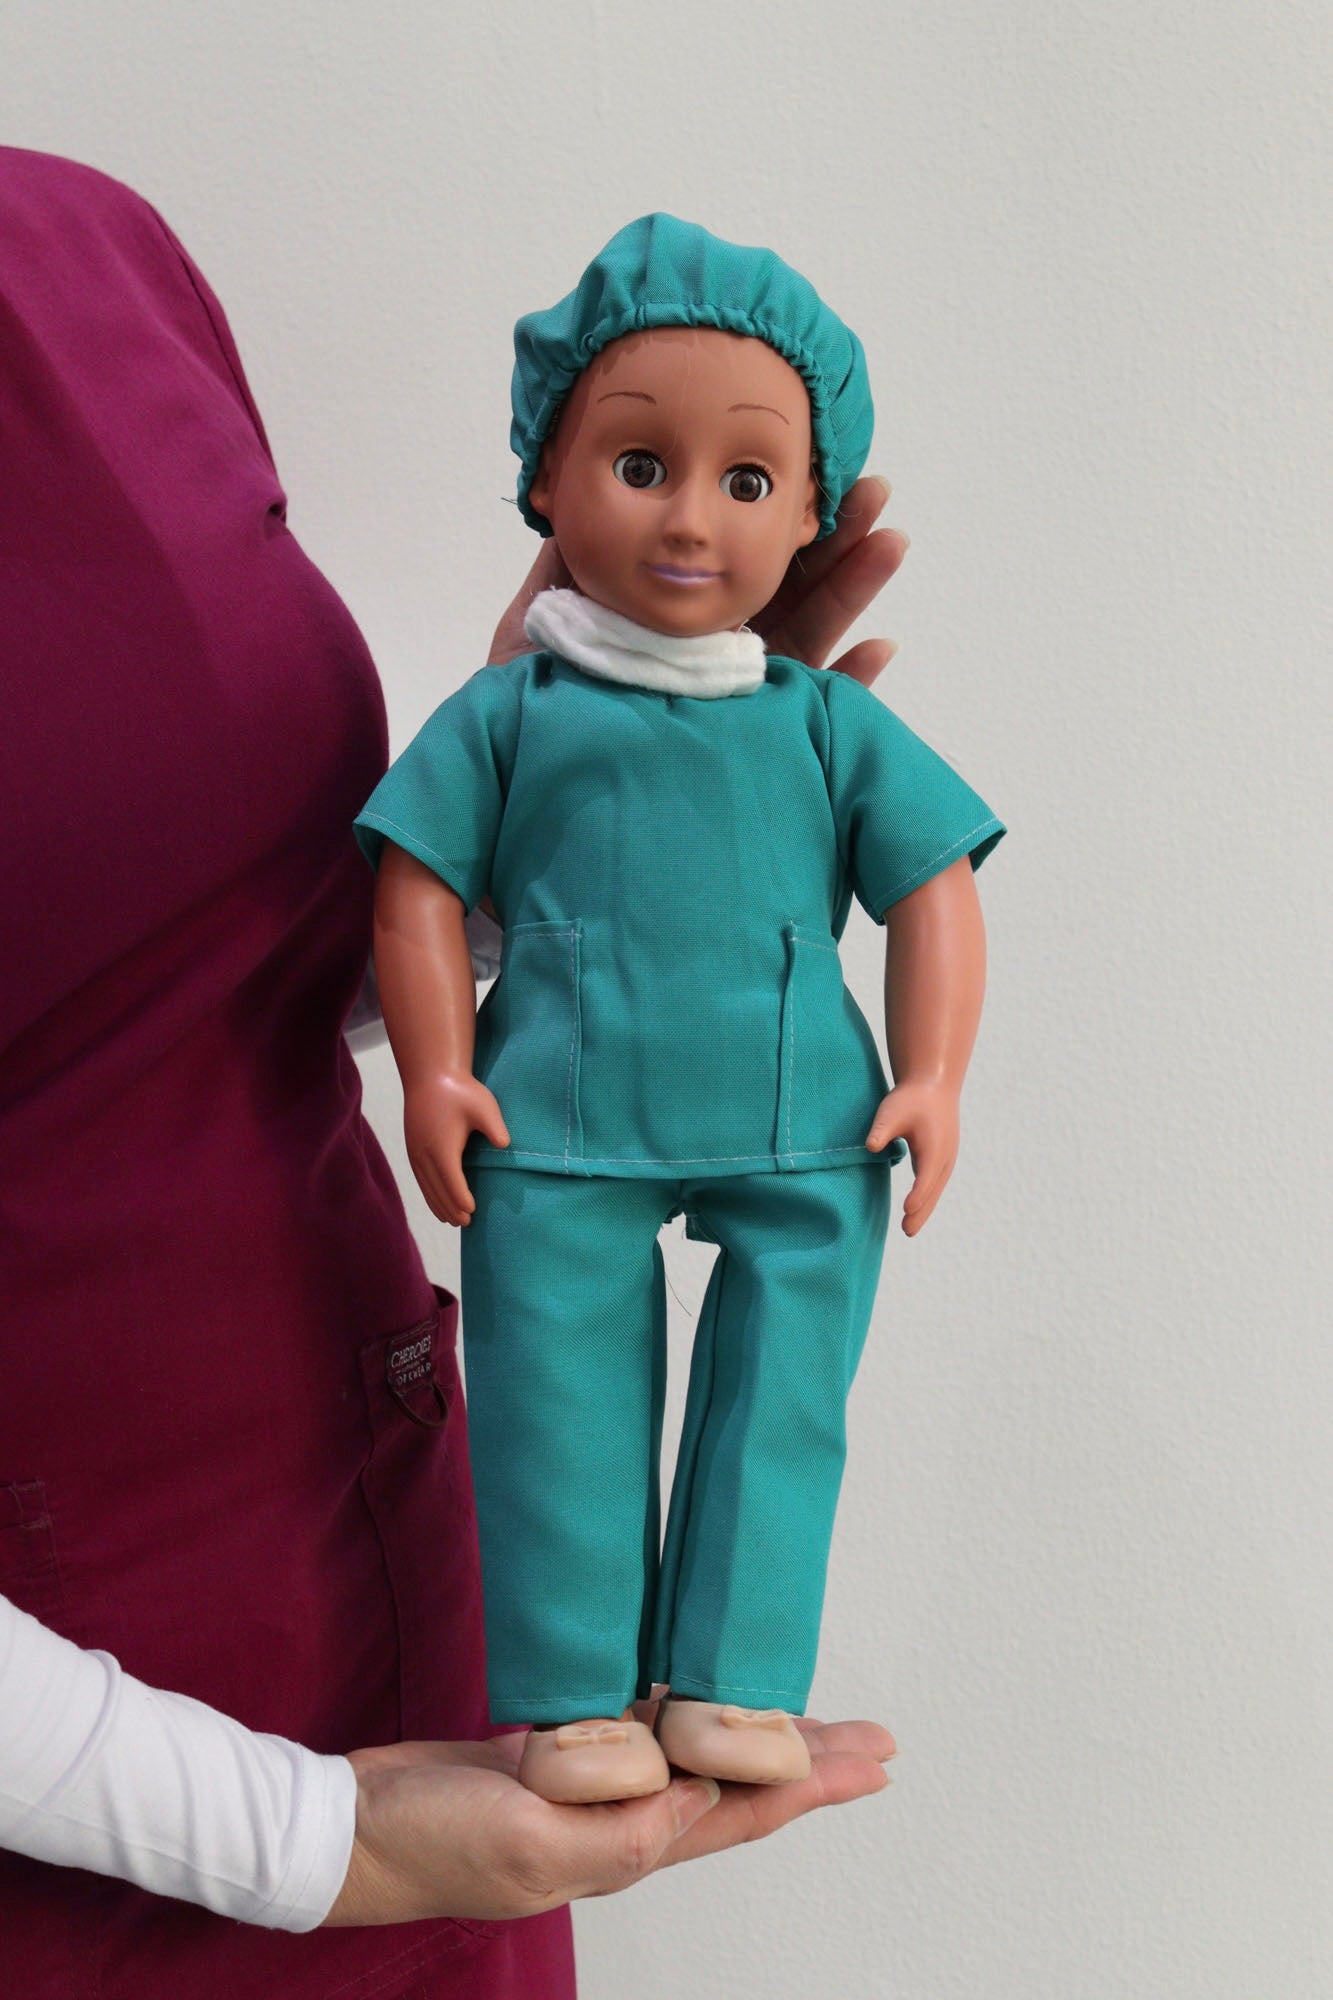 Female Surgery Doll